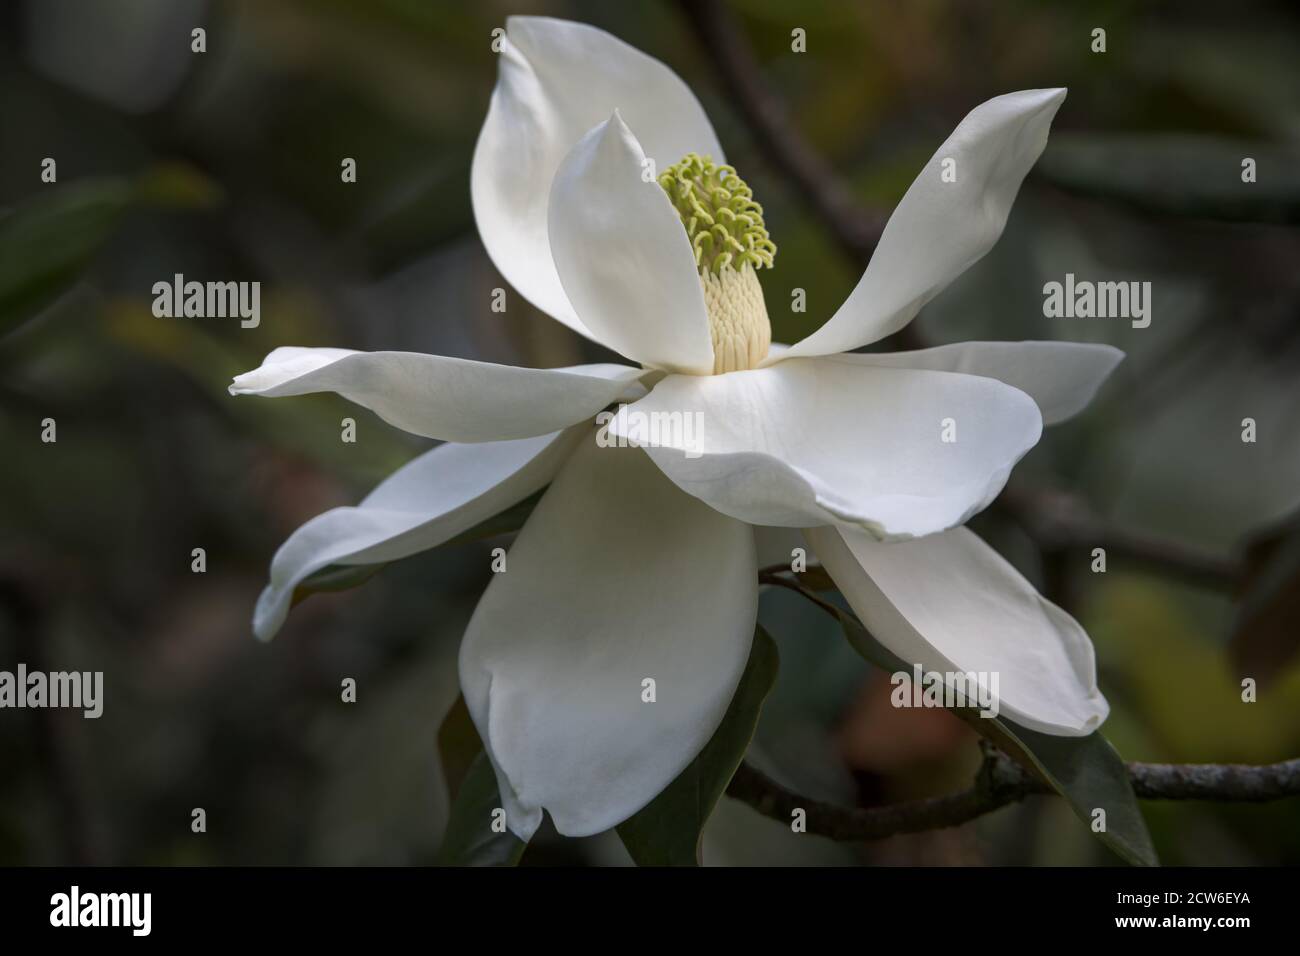 White magnolia blossom newly opened on tree Stock Photo